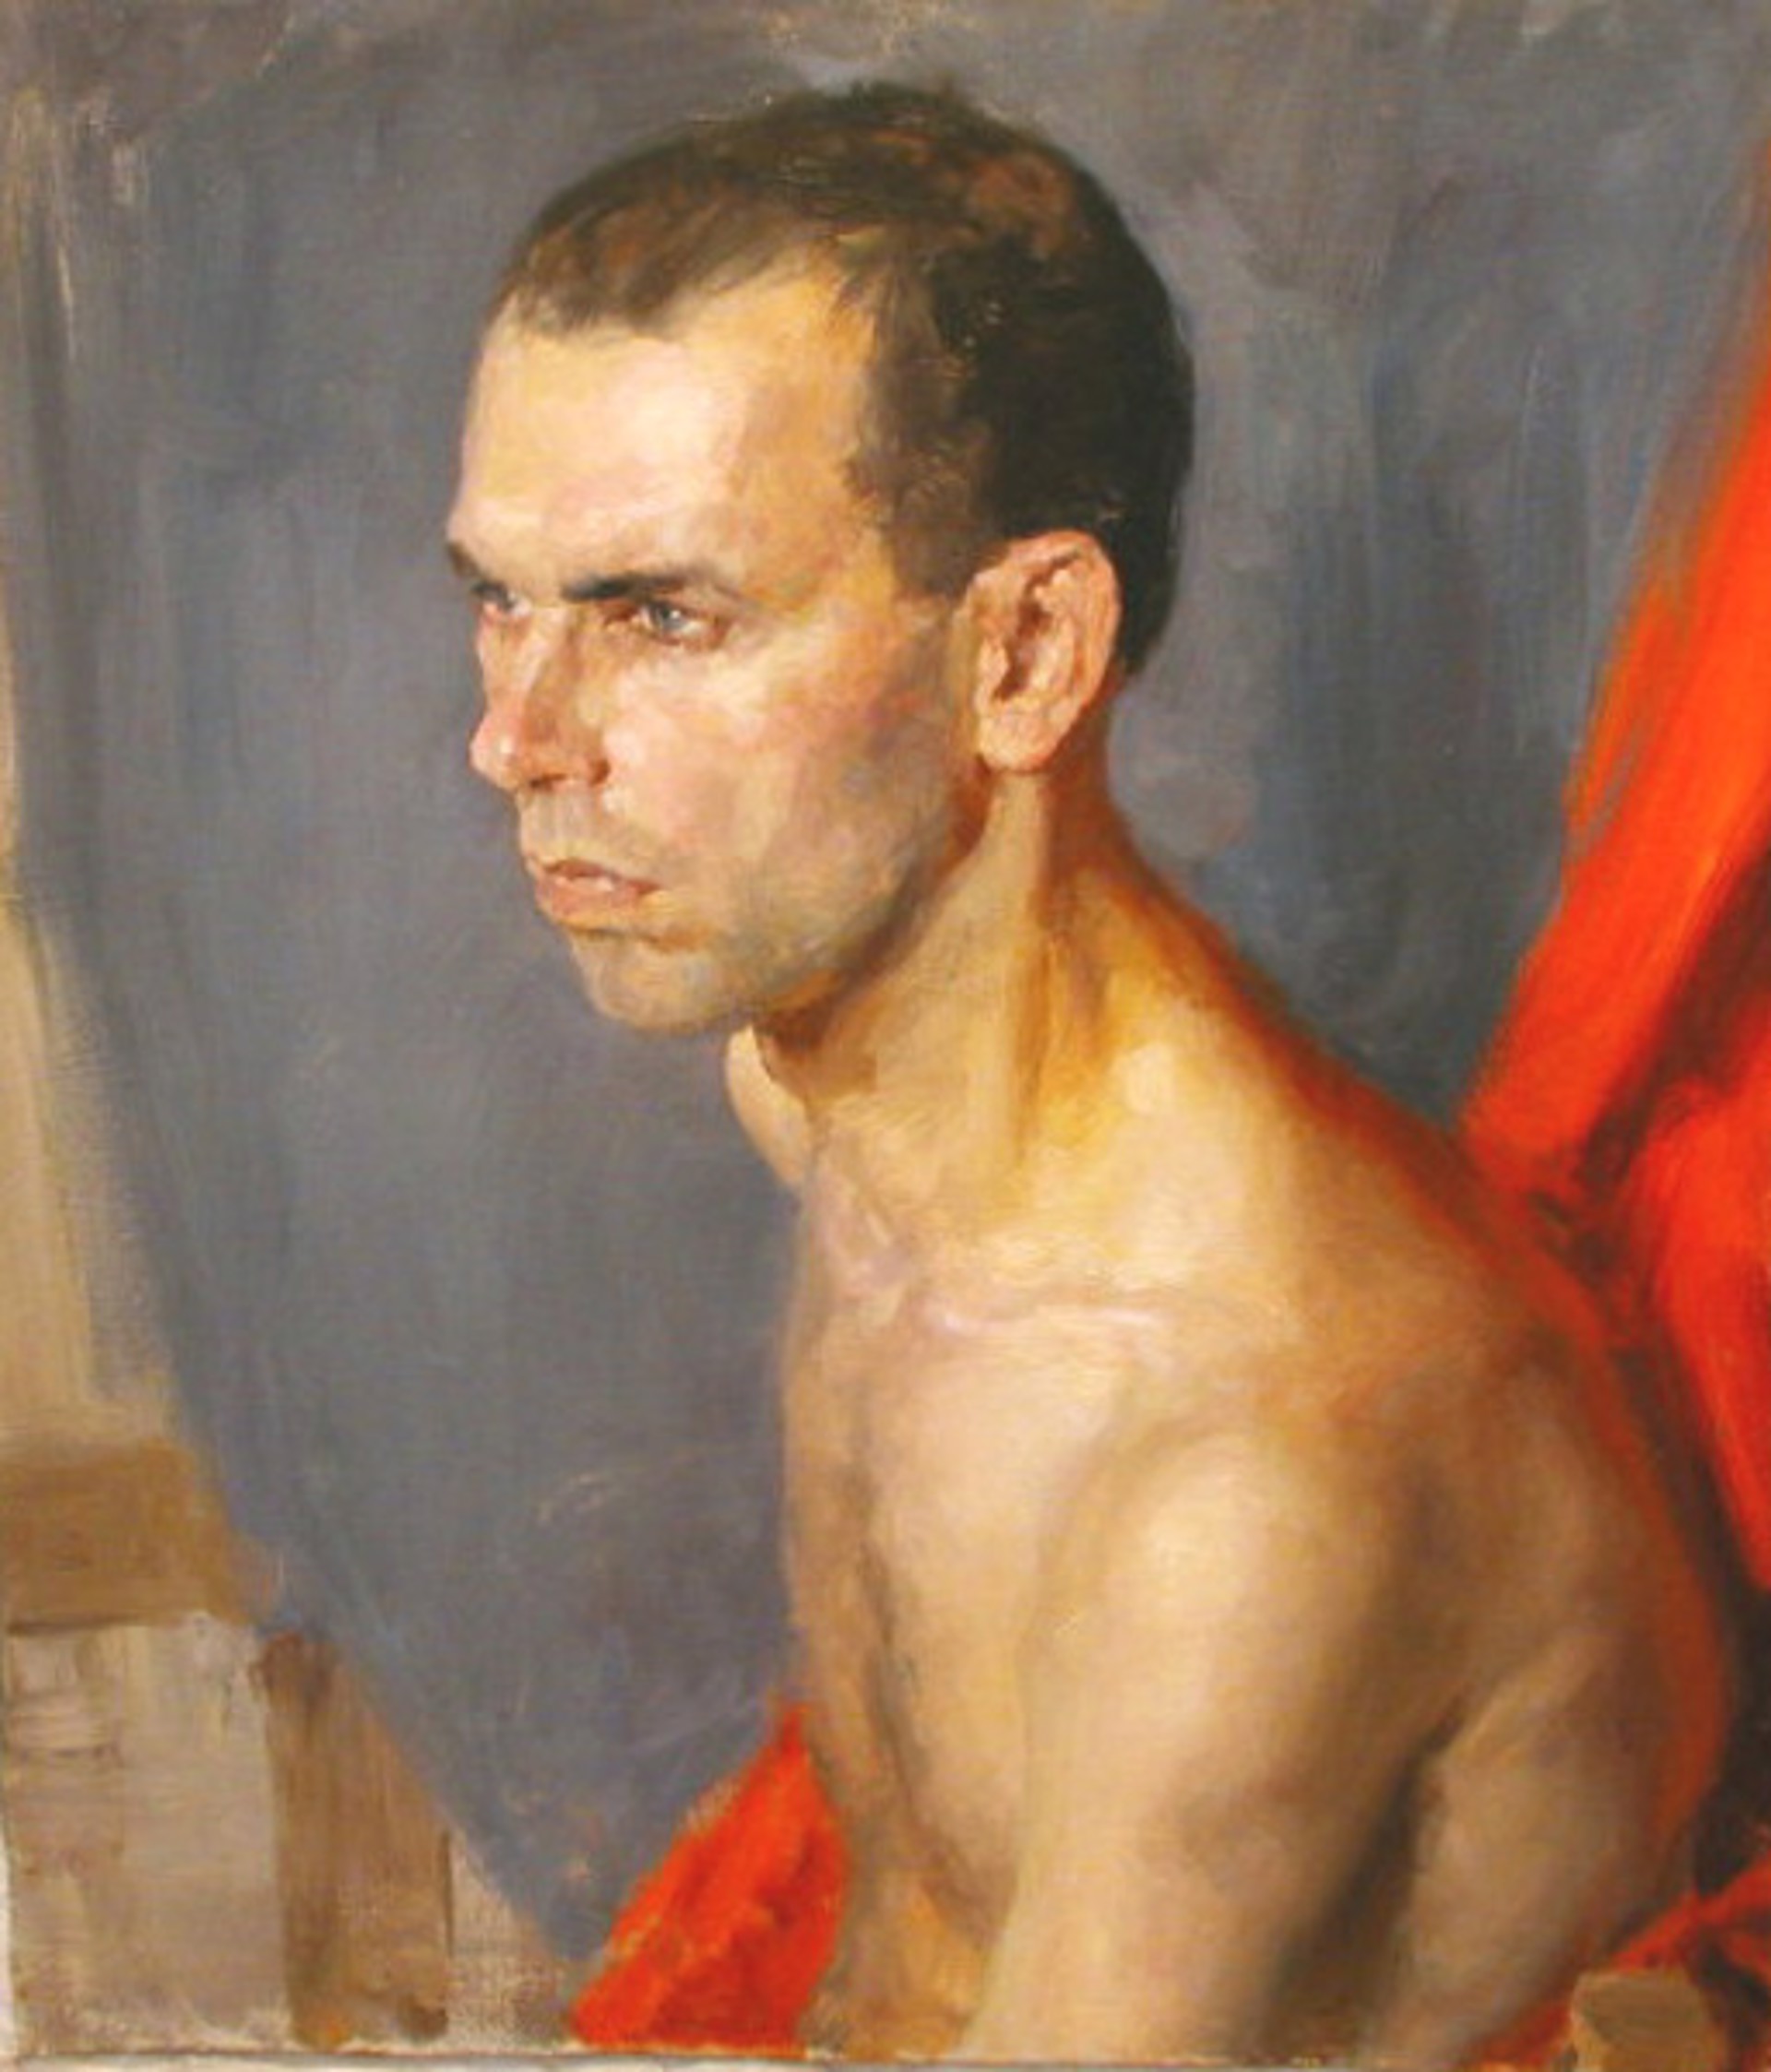 Portrait of a Shirtless Man by Ekaterina Morgun